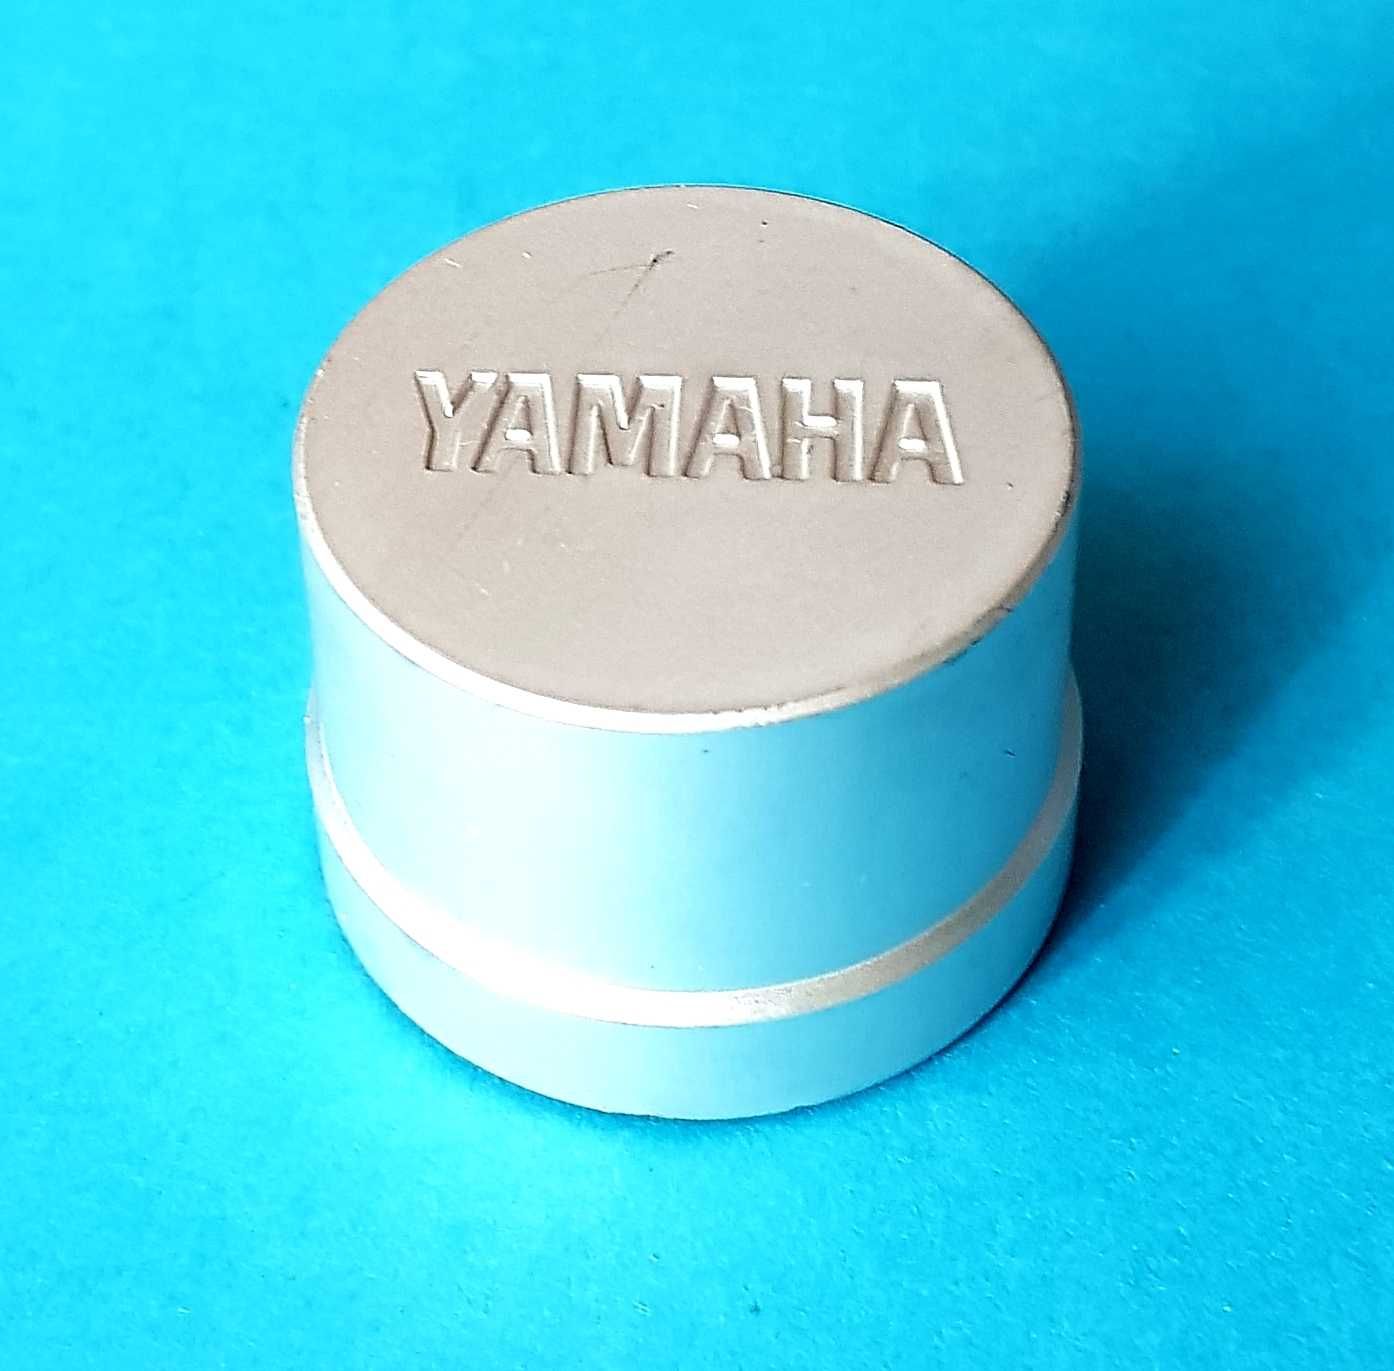 Stary oryginalny adapter do singli Yamaha lata 60-80-te XX w!